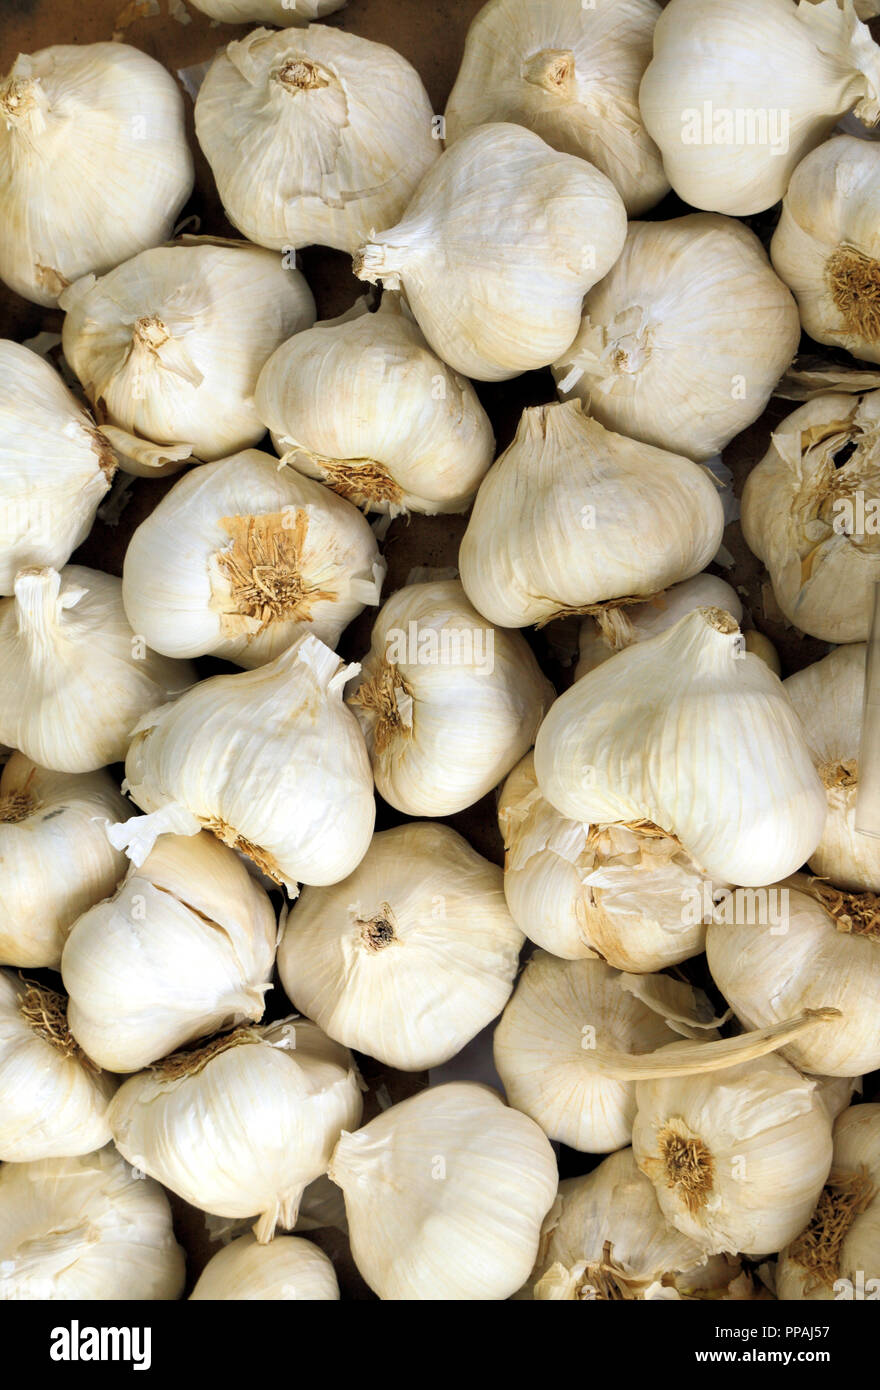 Garlic, Spanish, harvested, large variety, cloves, shop, display Stock Photo